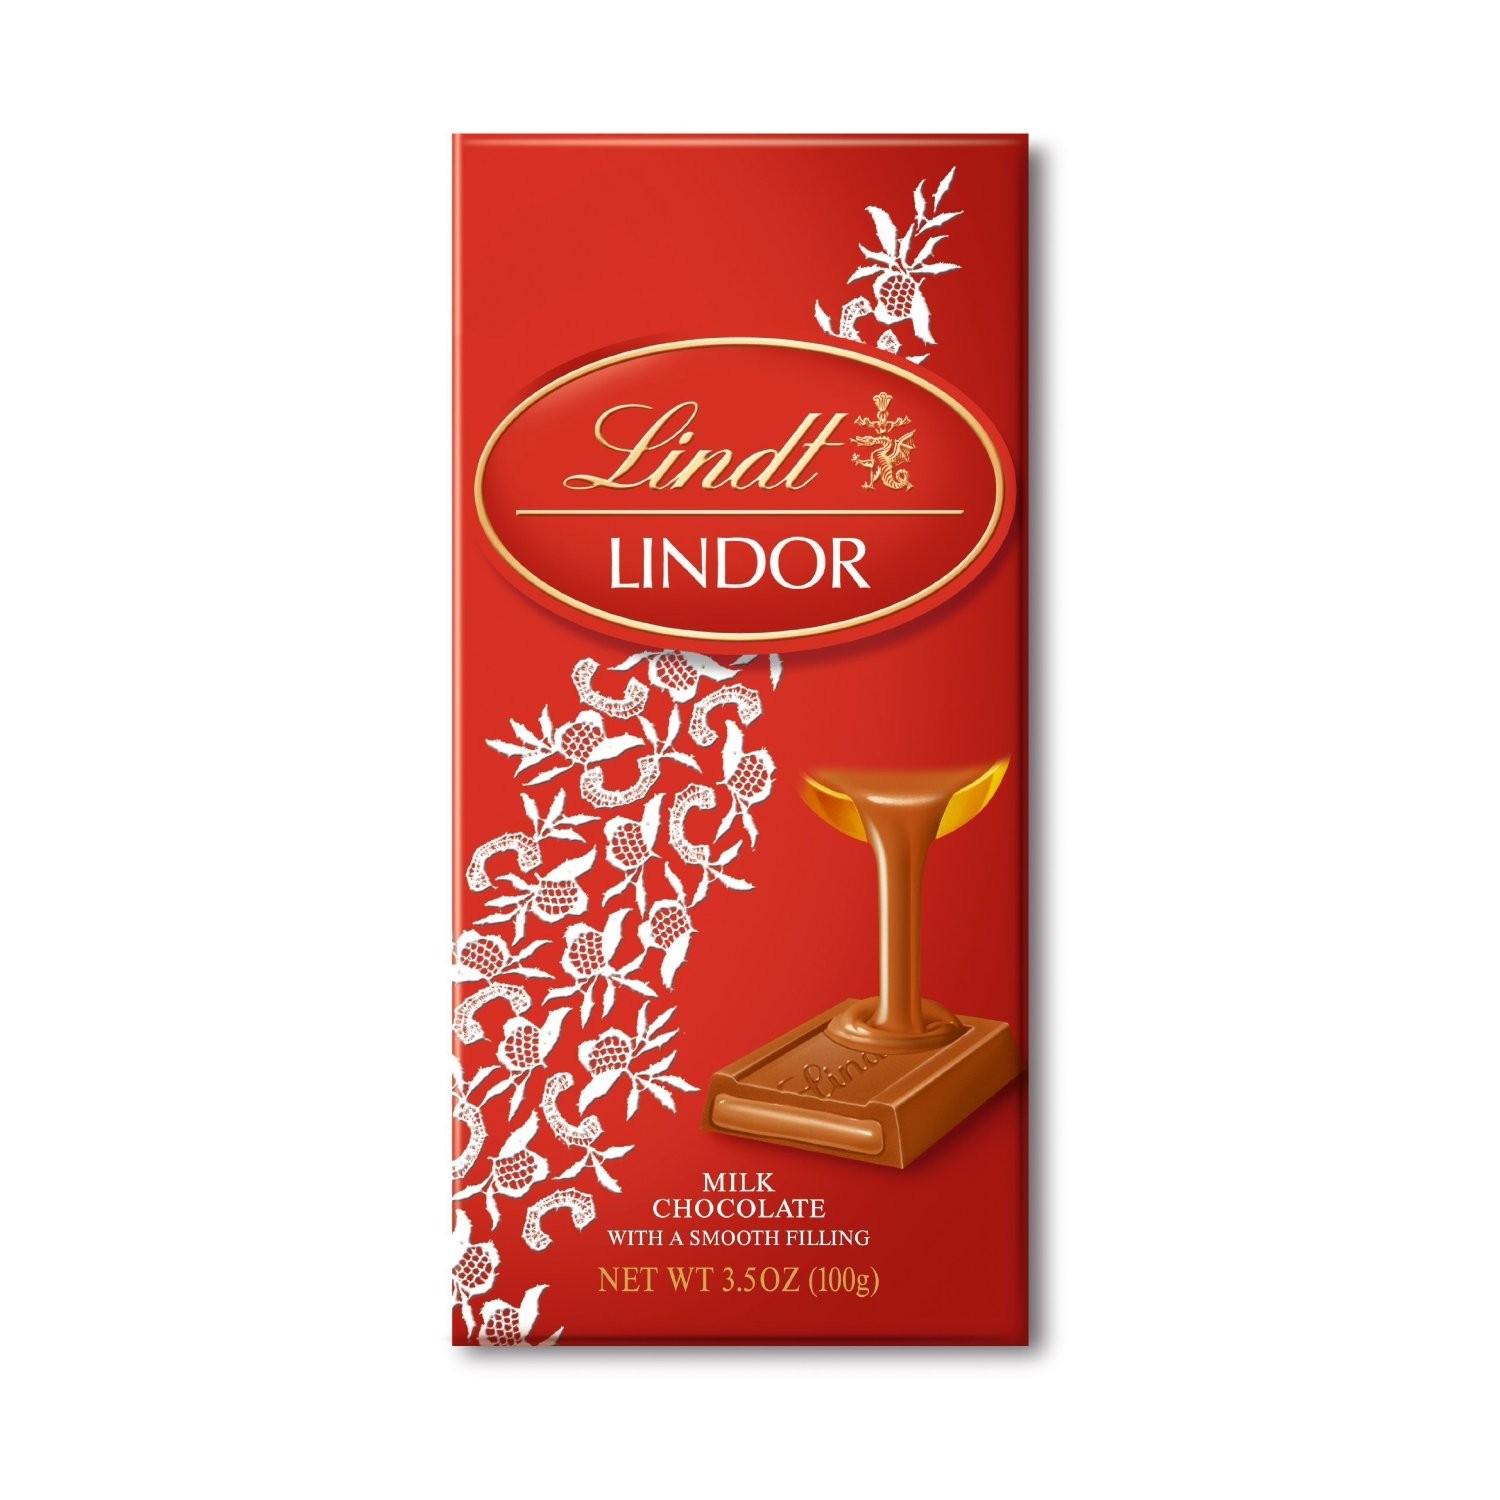 2-1-lindt-chocolate-printable-coupon-free-at-walgreens-starting-11